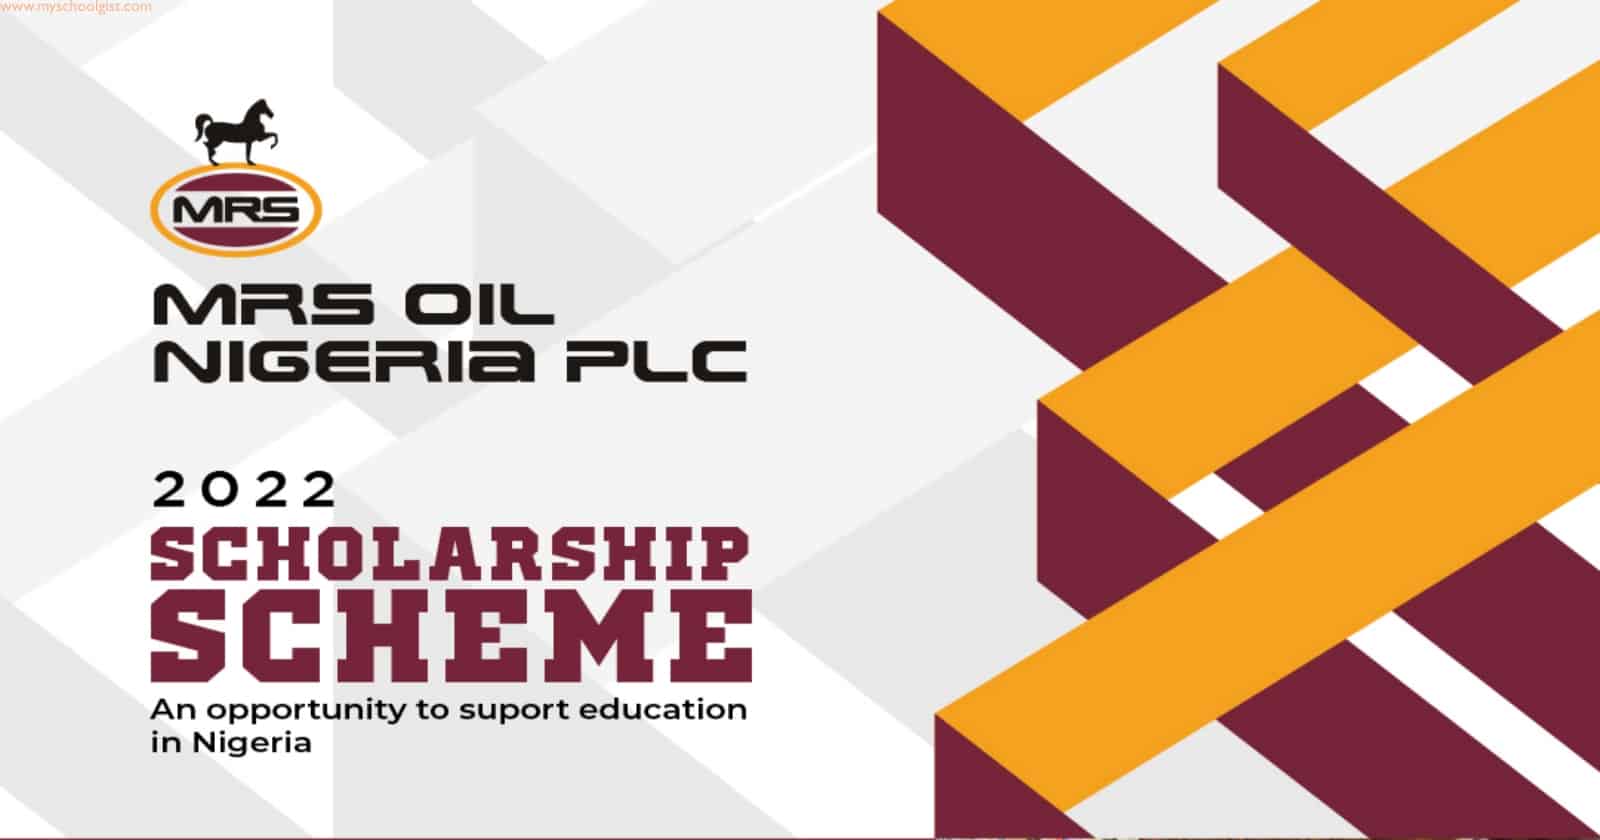 MRS Oil Nigeria Plc Scholarship Grant 2022